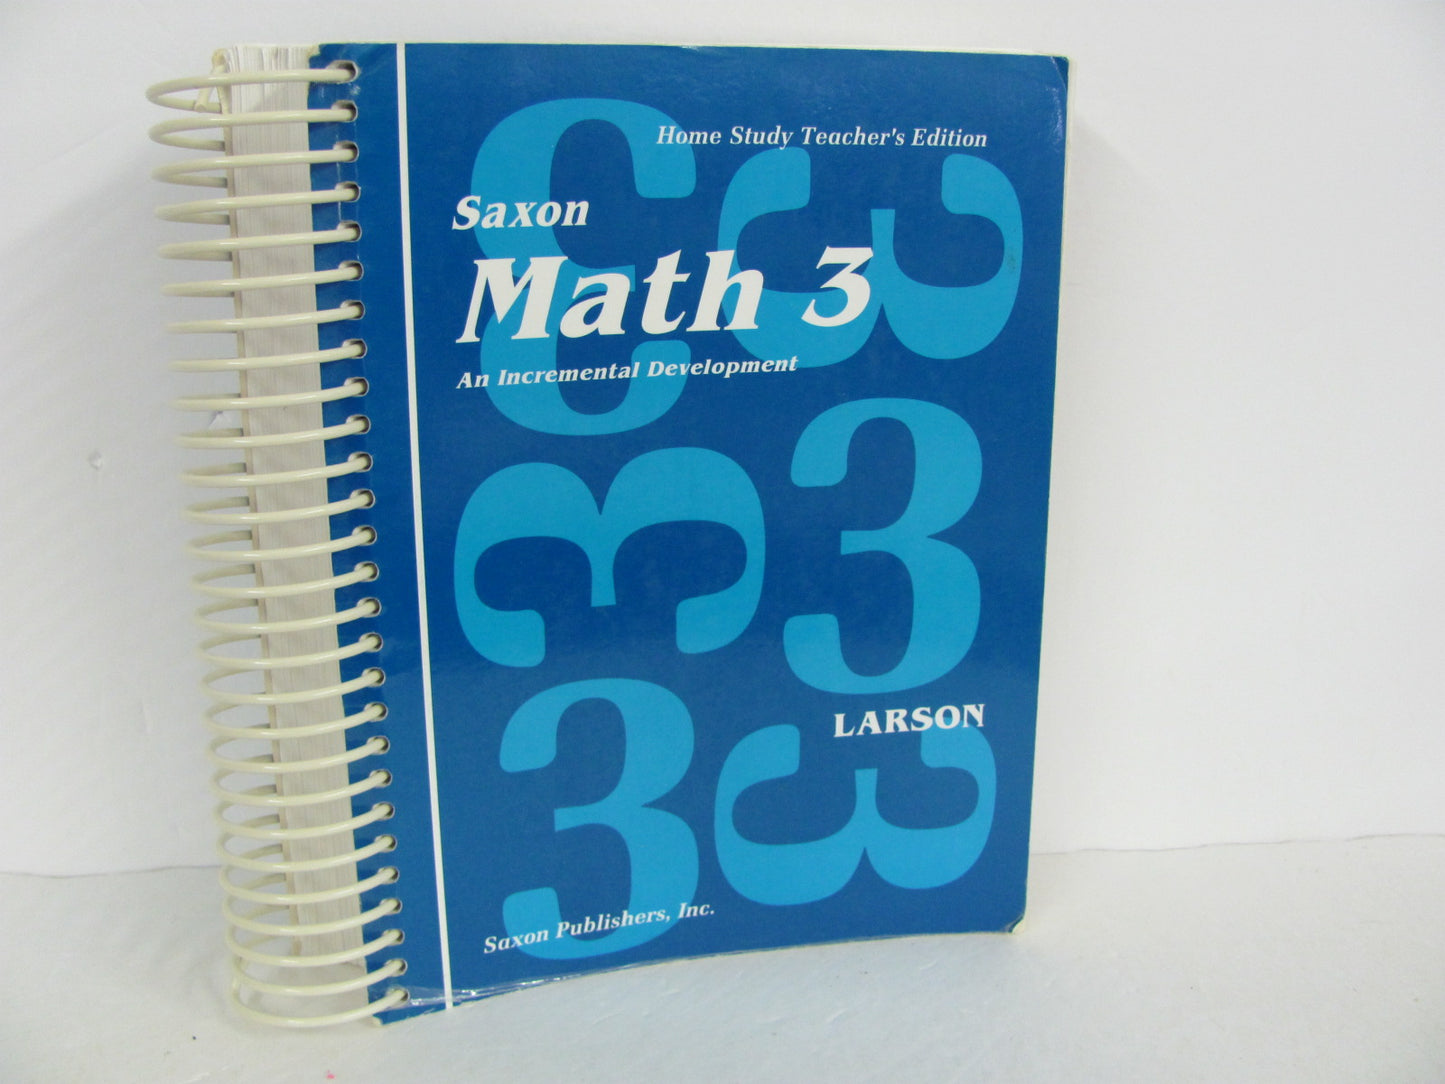 Math 3 Saxon Teacher's Edition Used Larson 3rd Grade Mathematics Textbooks